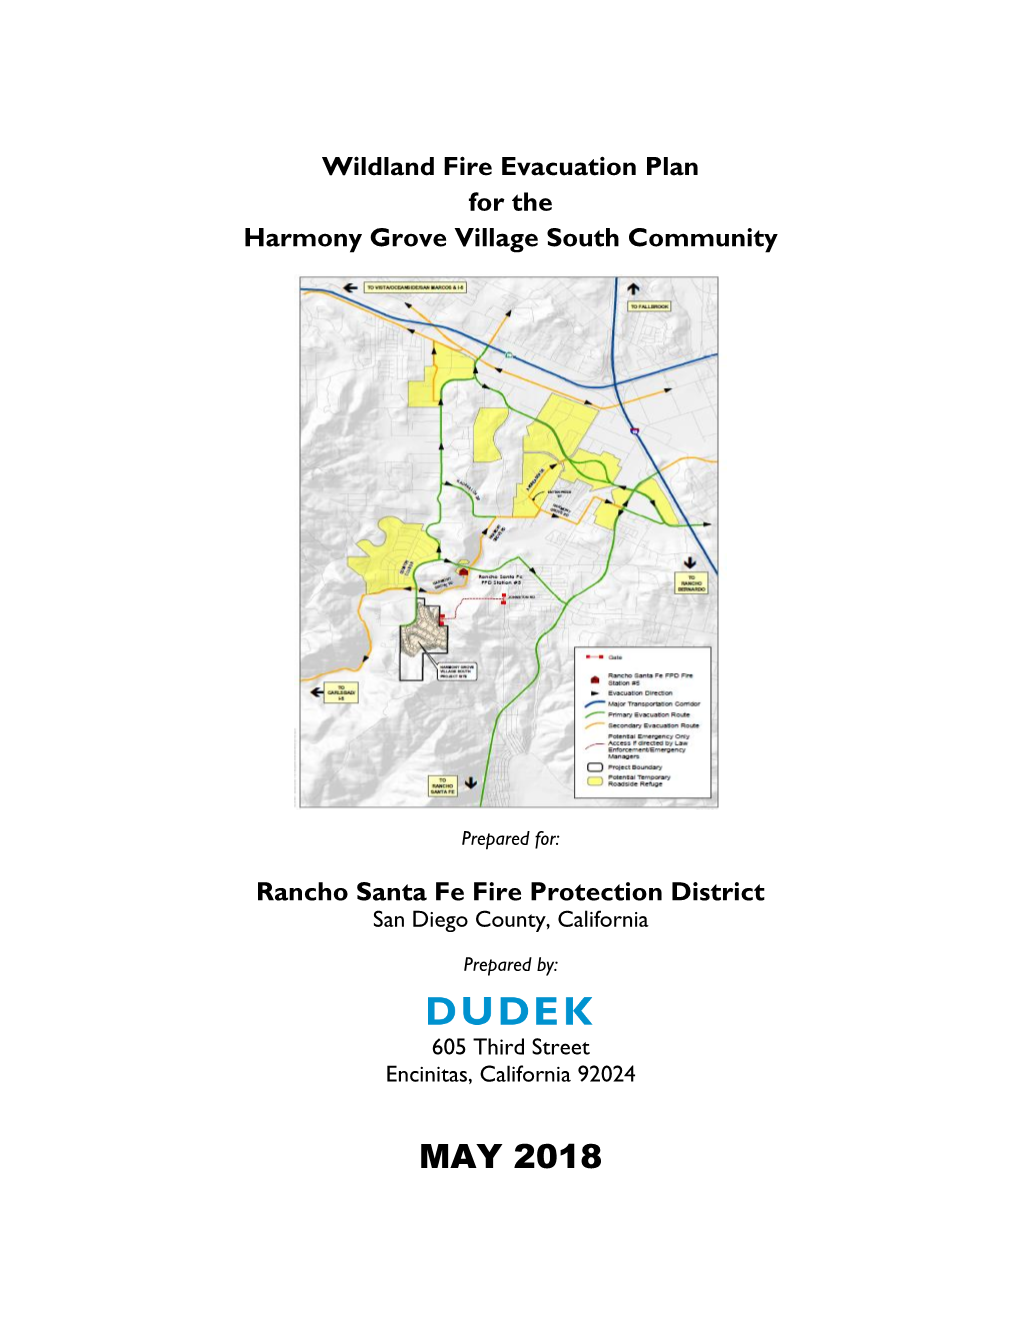 Wildland Fire Evacuation Plan for the Harmony Grove Village South Community